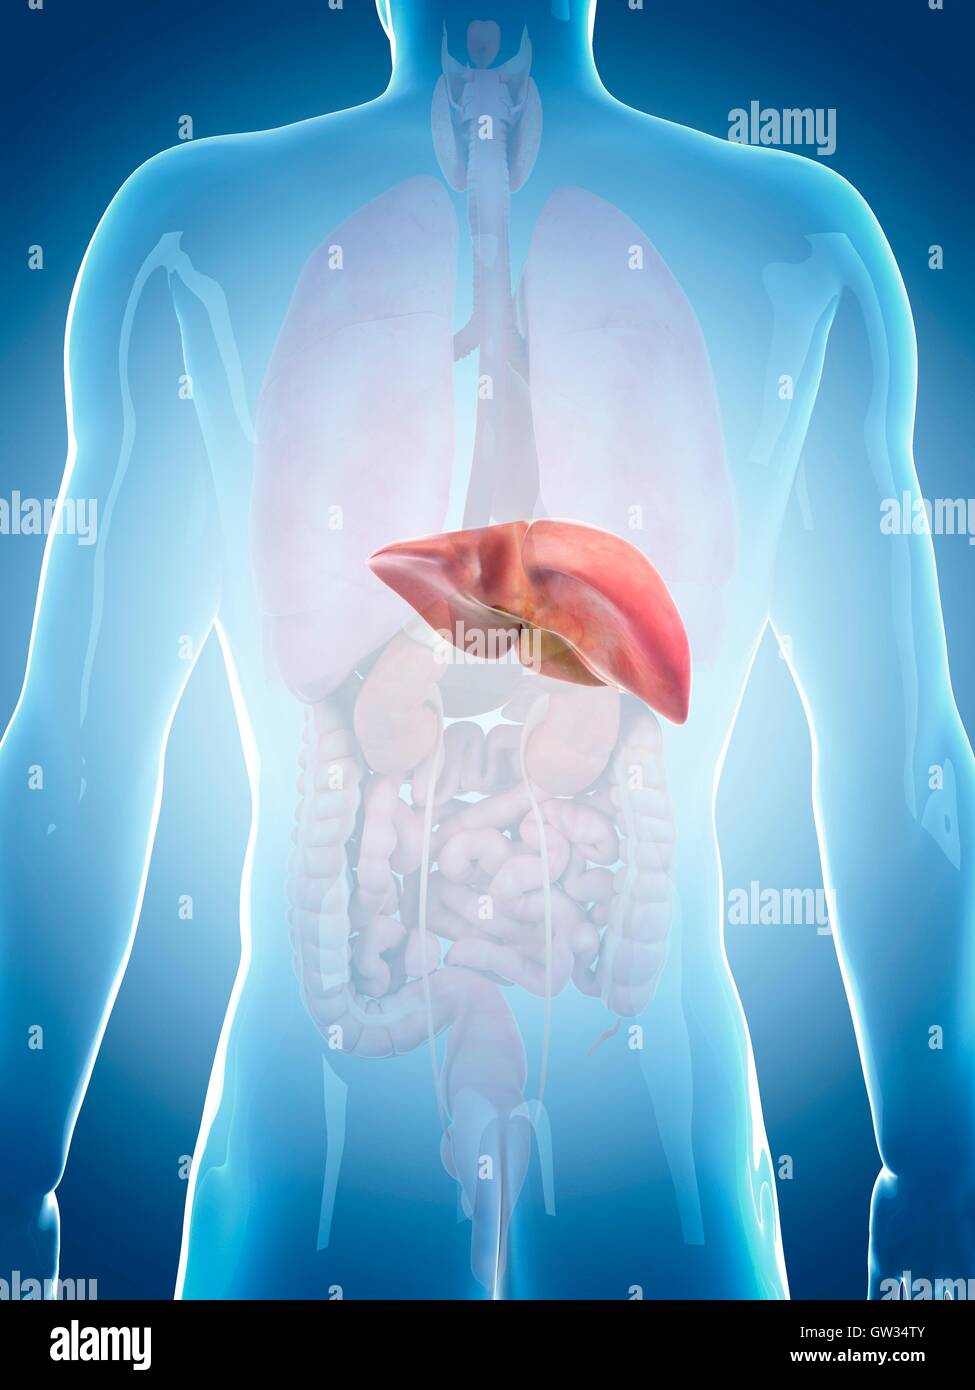 Human liver, illustration Stock Photo - Alamy